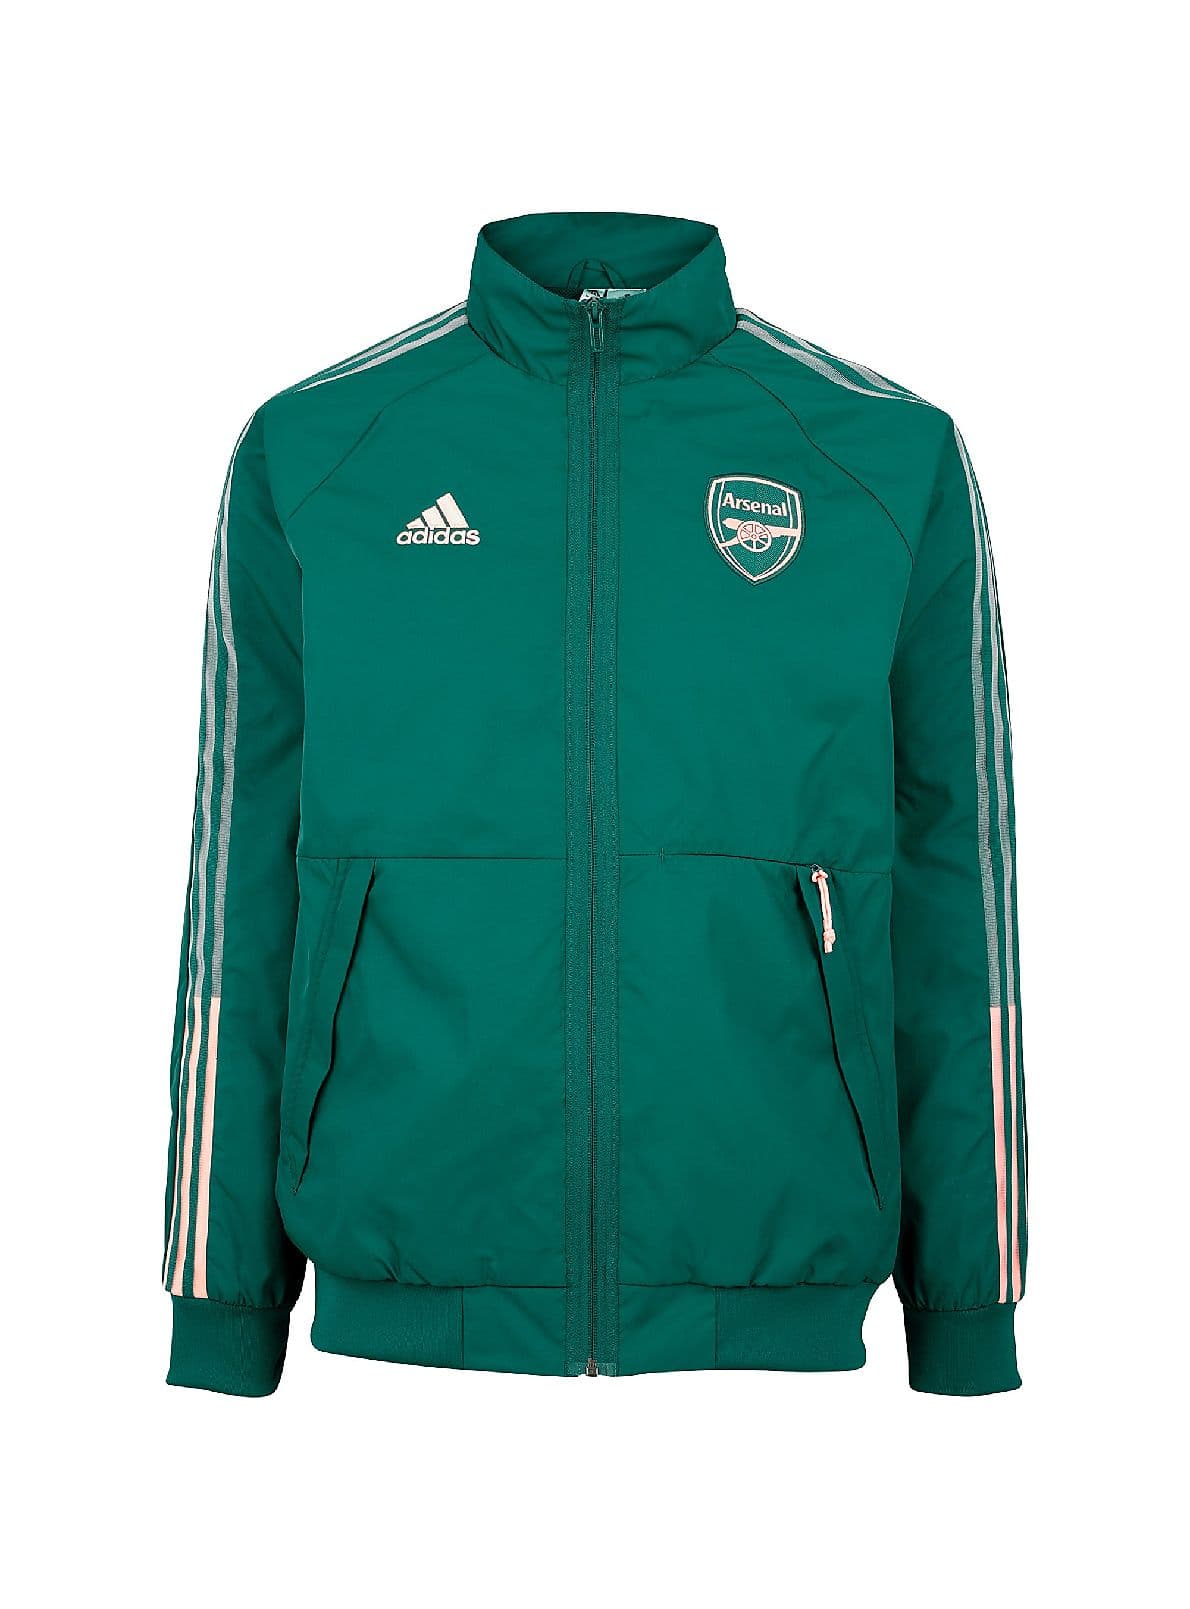 Arsenal gear 2021/22 - Anthem jersey green